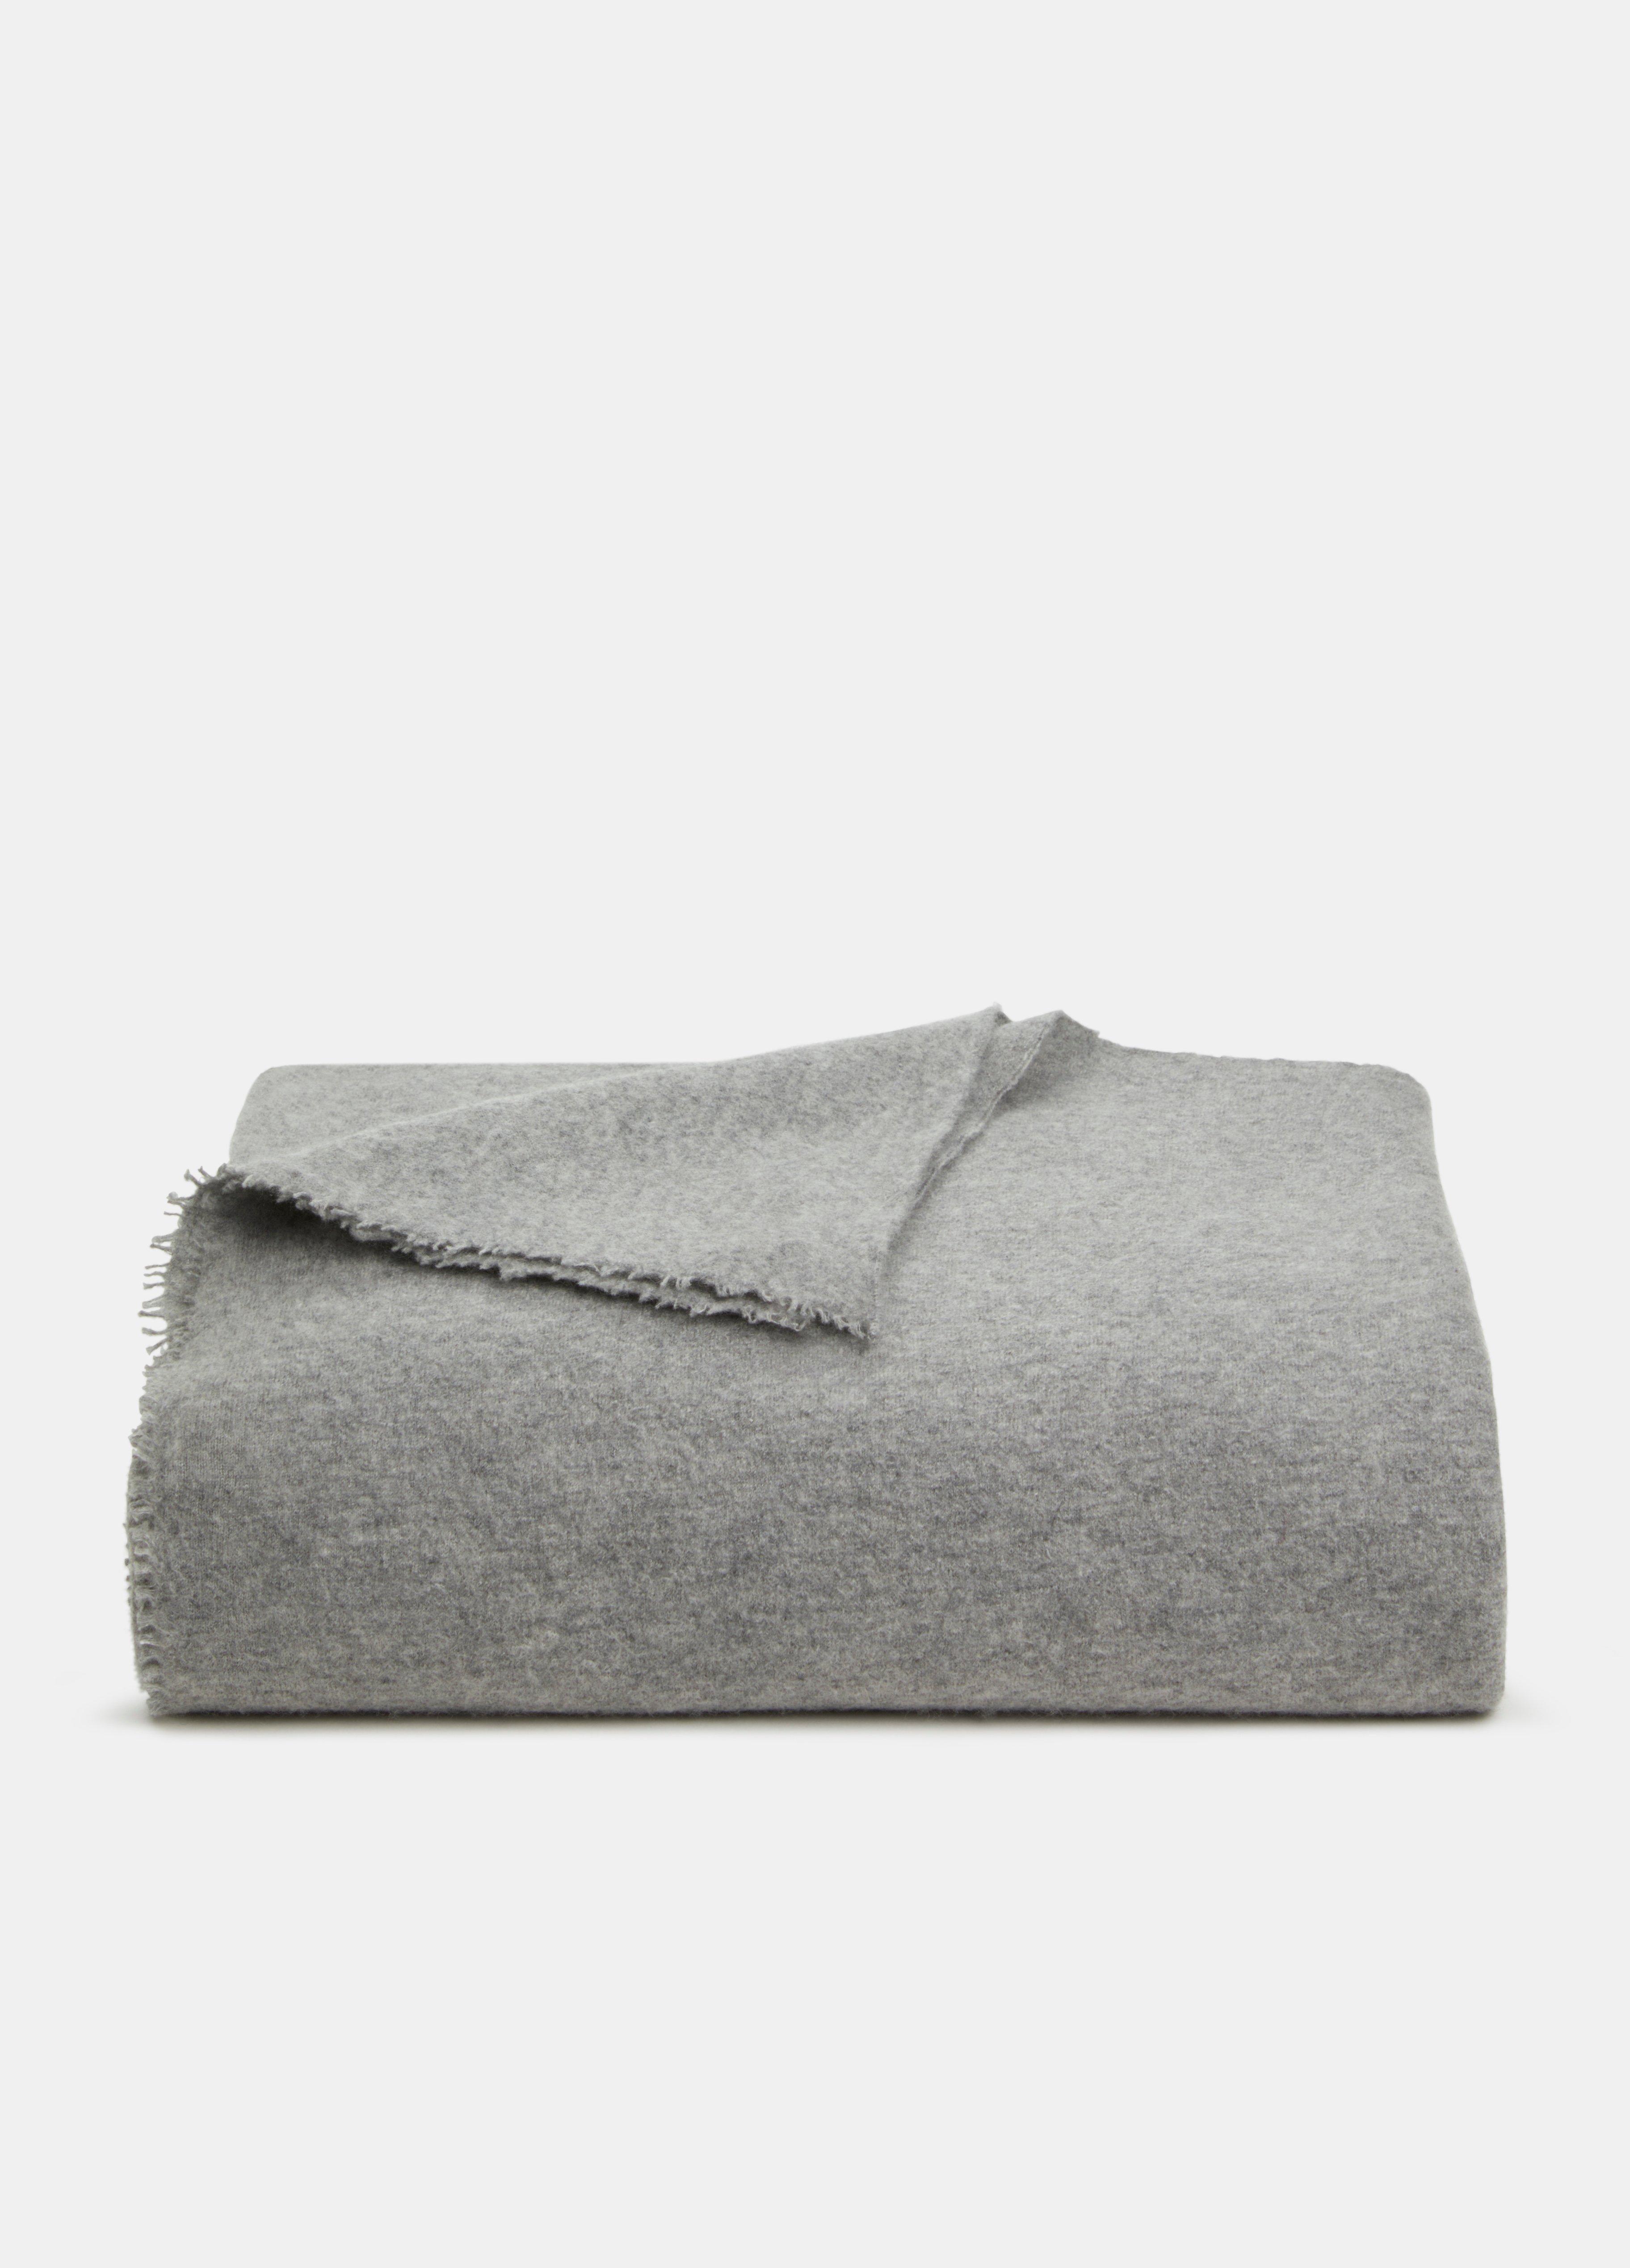 Men's Thermal Knit Lounge Set With Cashmere Blanket - Dapple/Taupe Melange